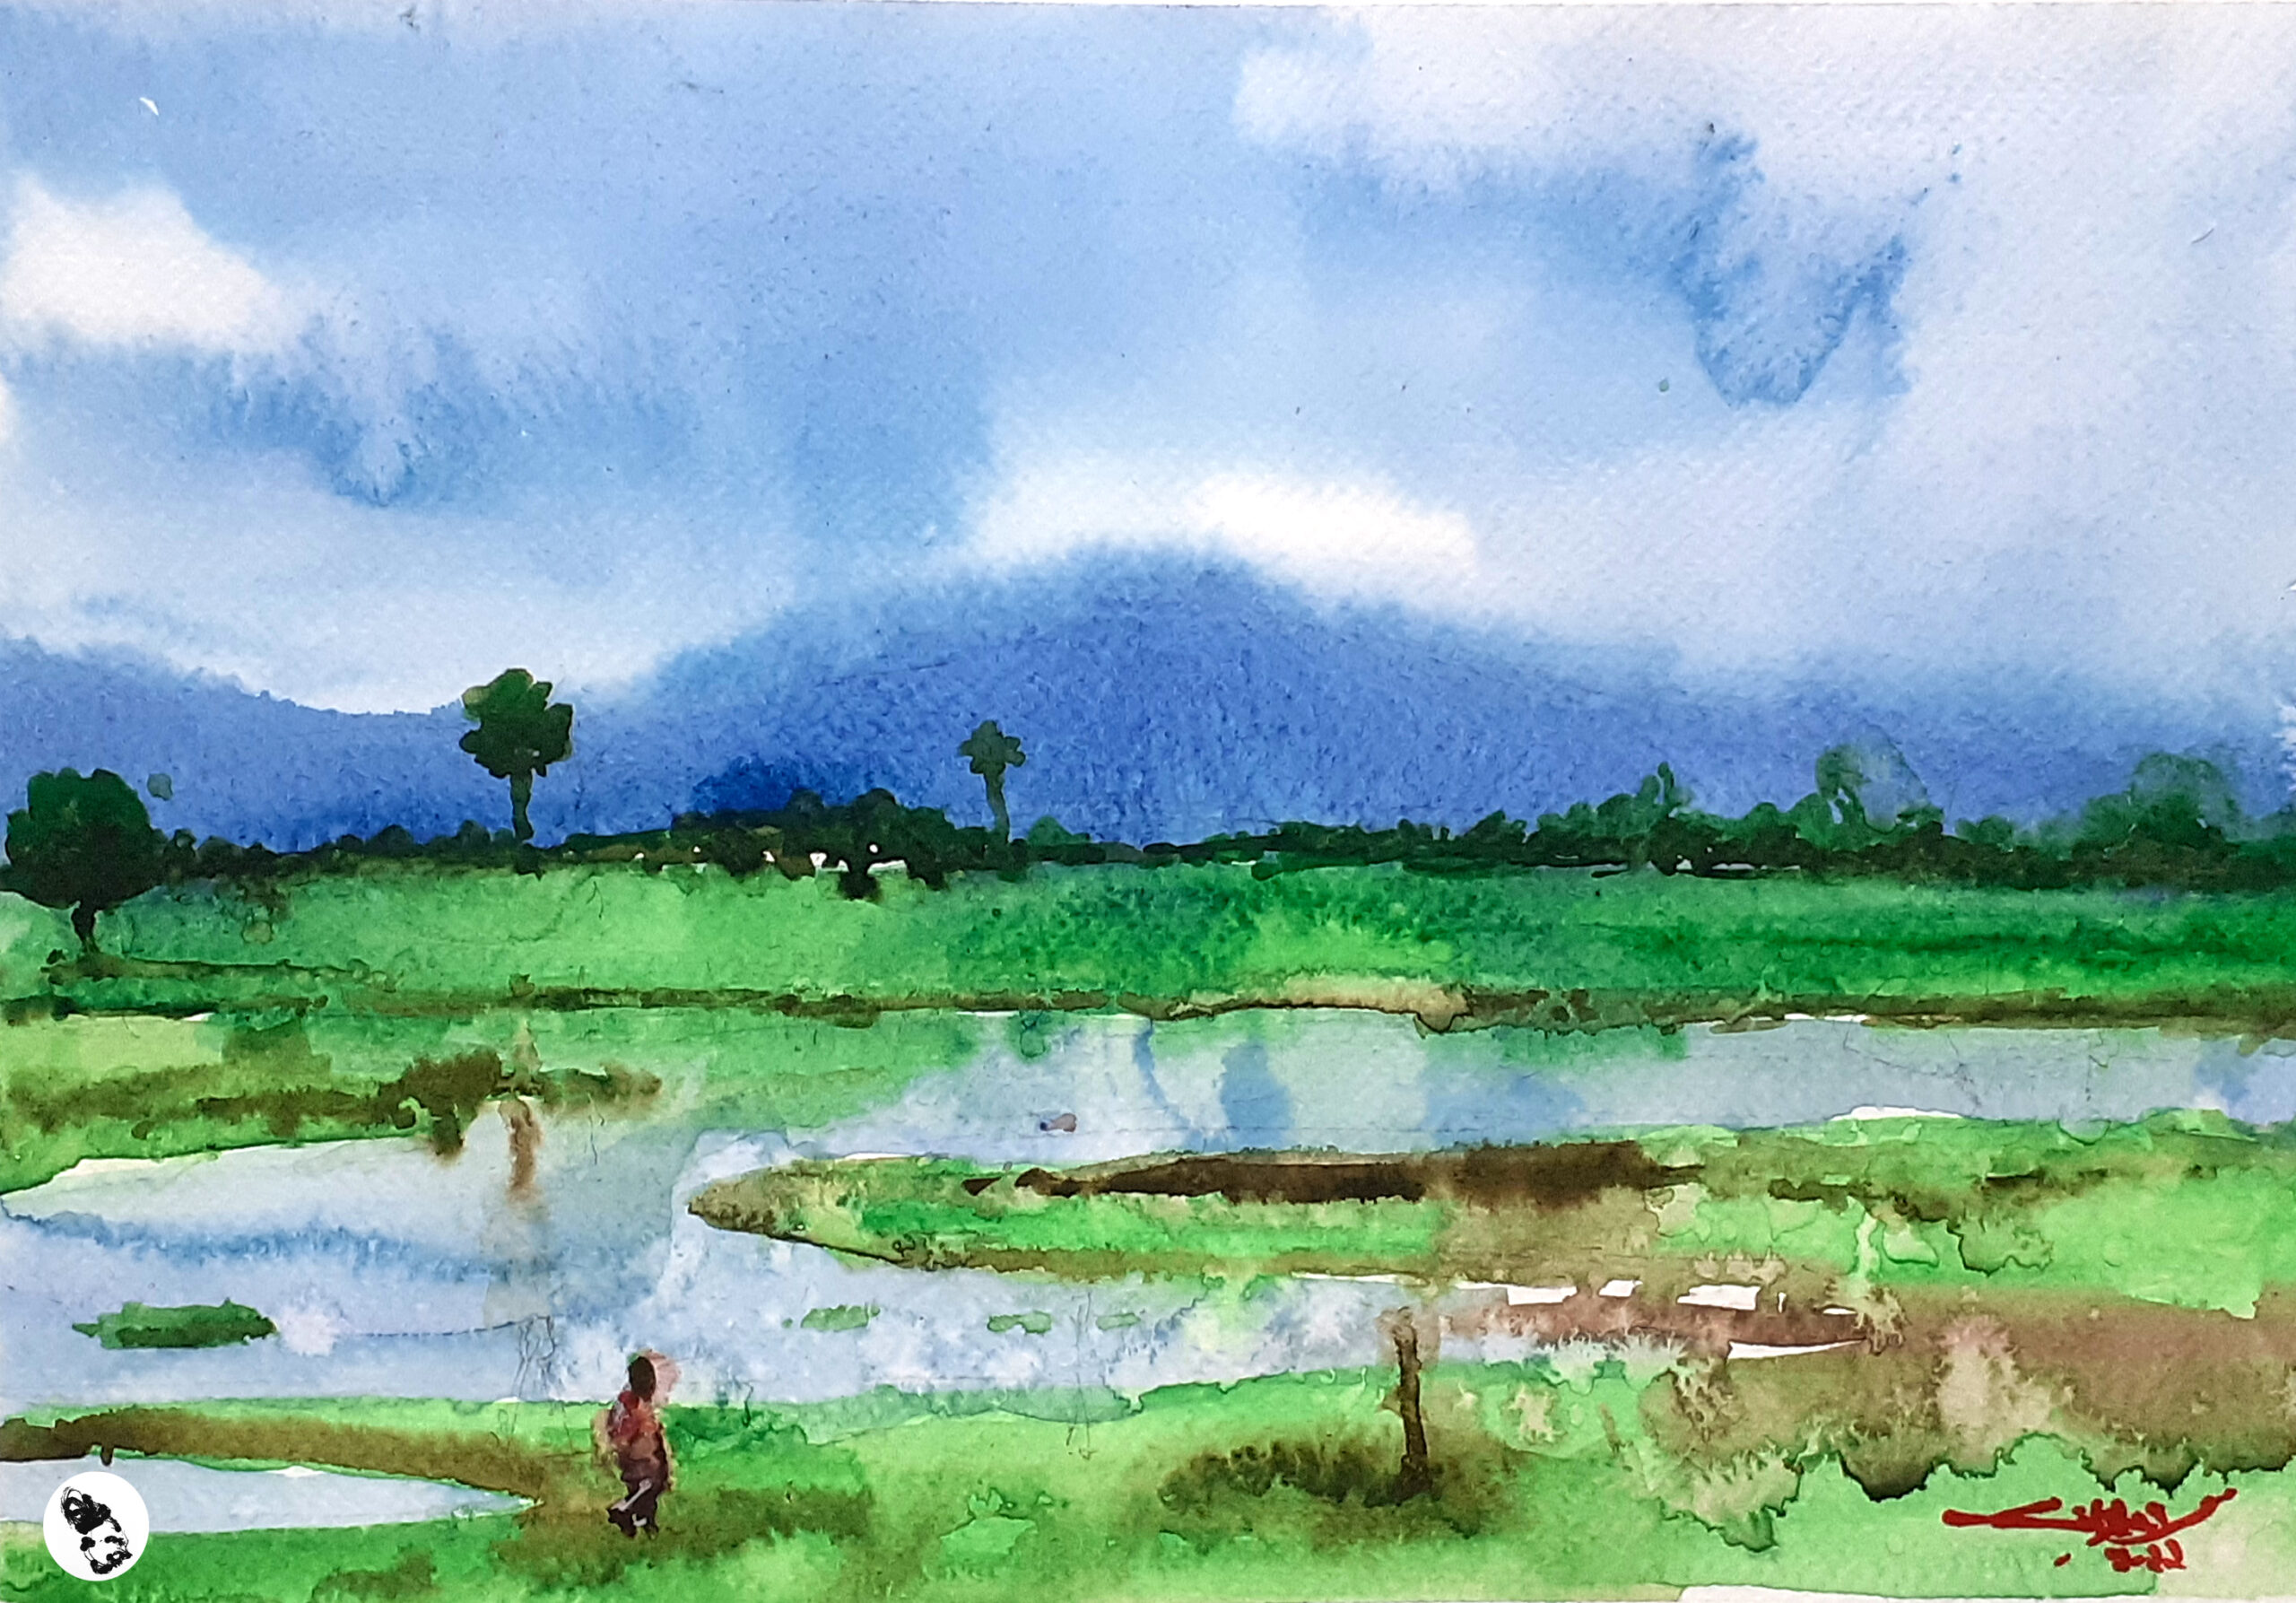 kerala village life watercolor painting | hakeem wc | Flickr